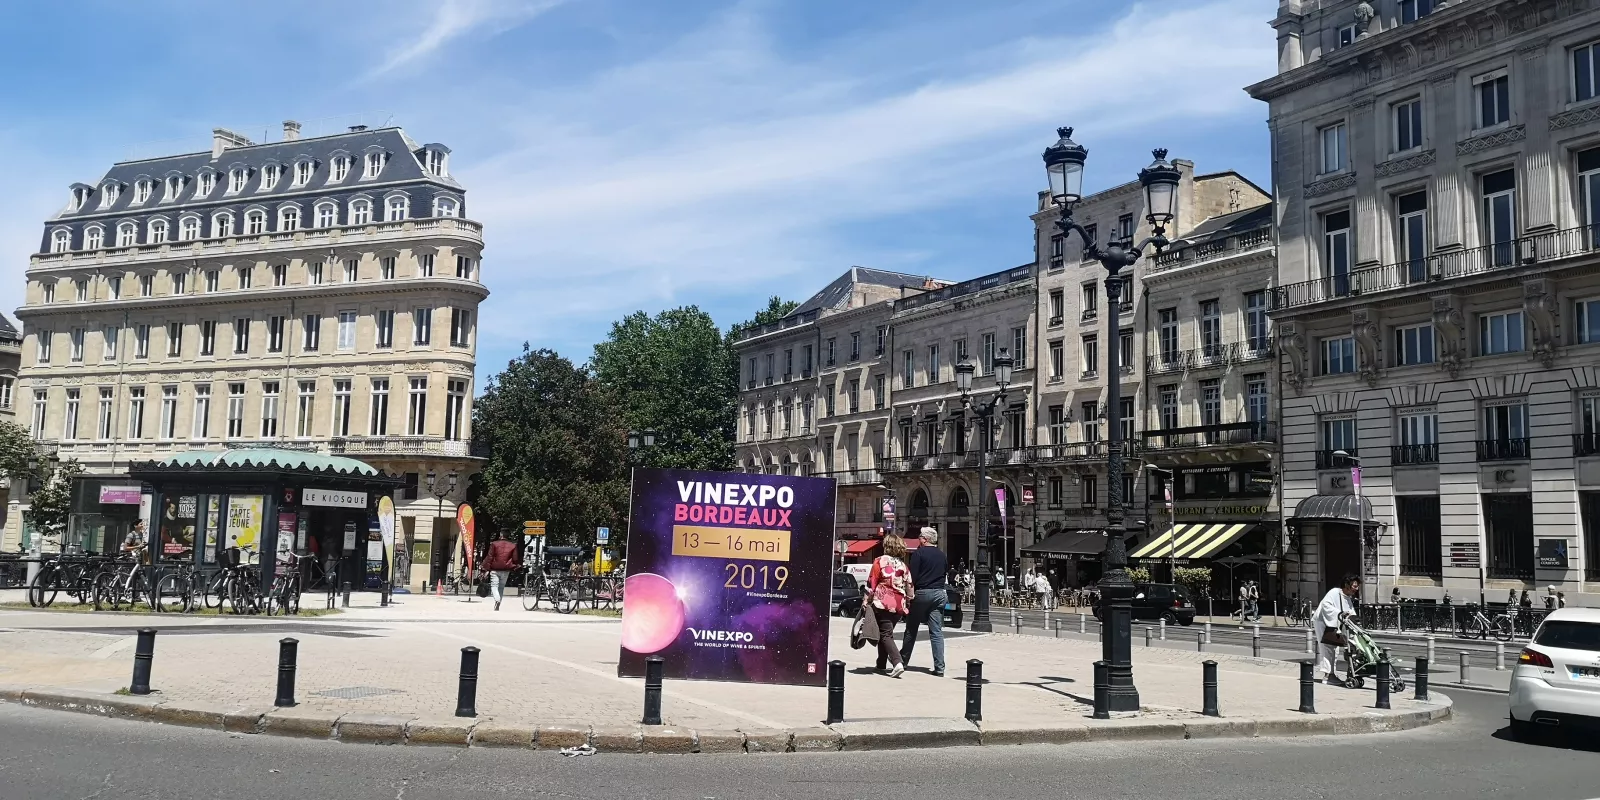 Pavoisement rue VINEXPO 2019